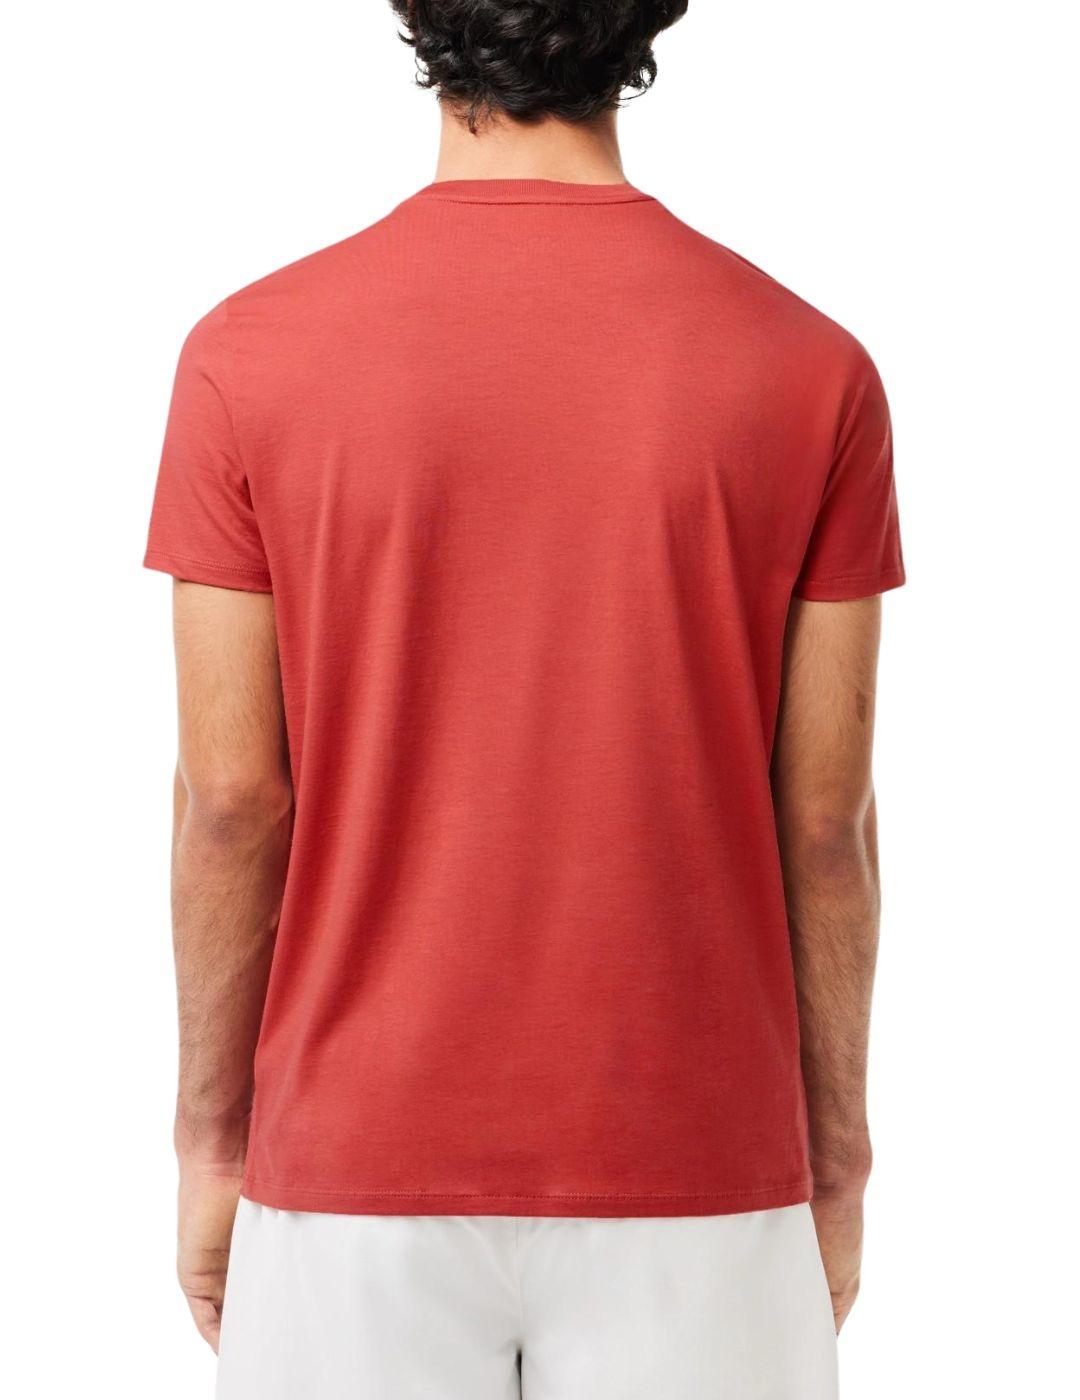 Camiseta Lacoste básica de manga corta de hombre pima cotton